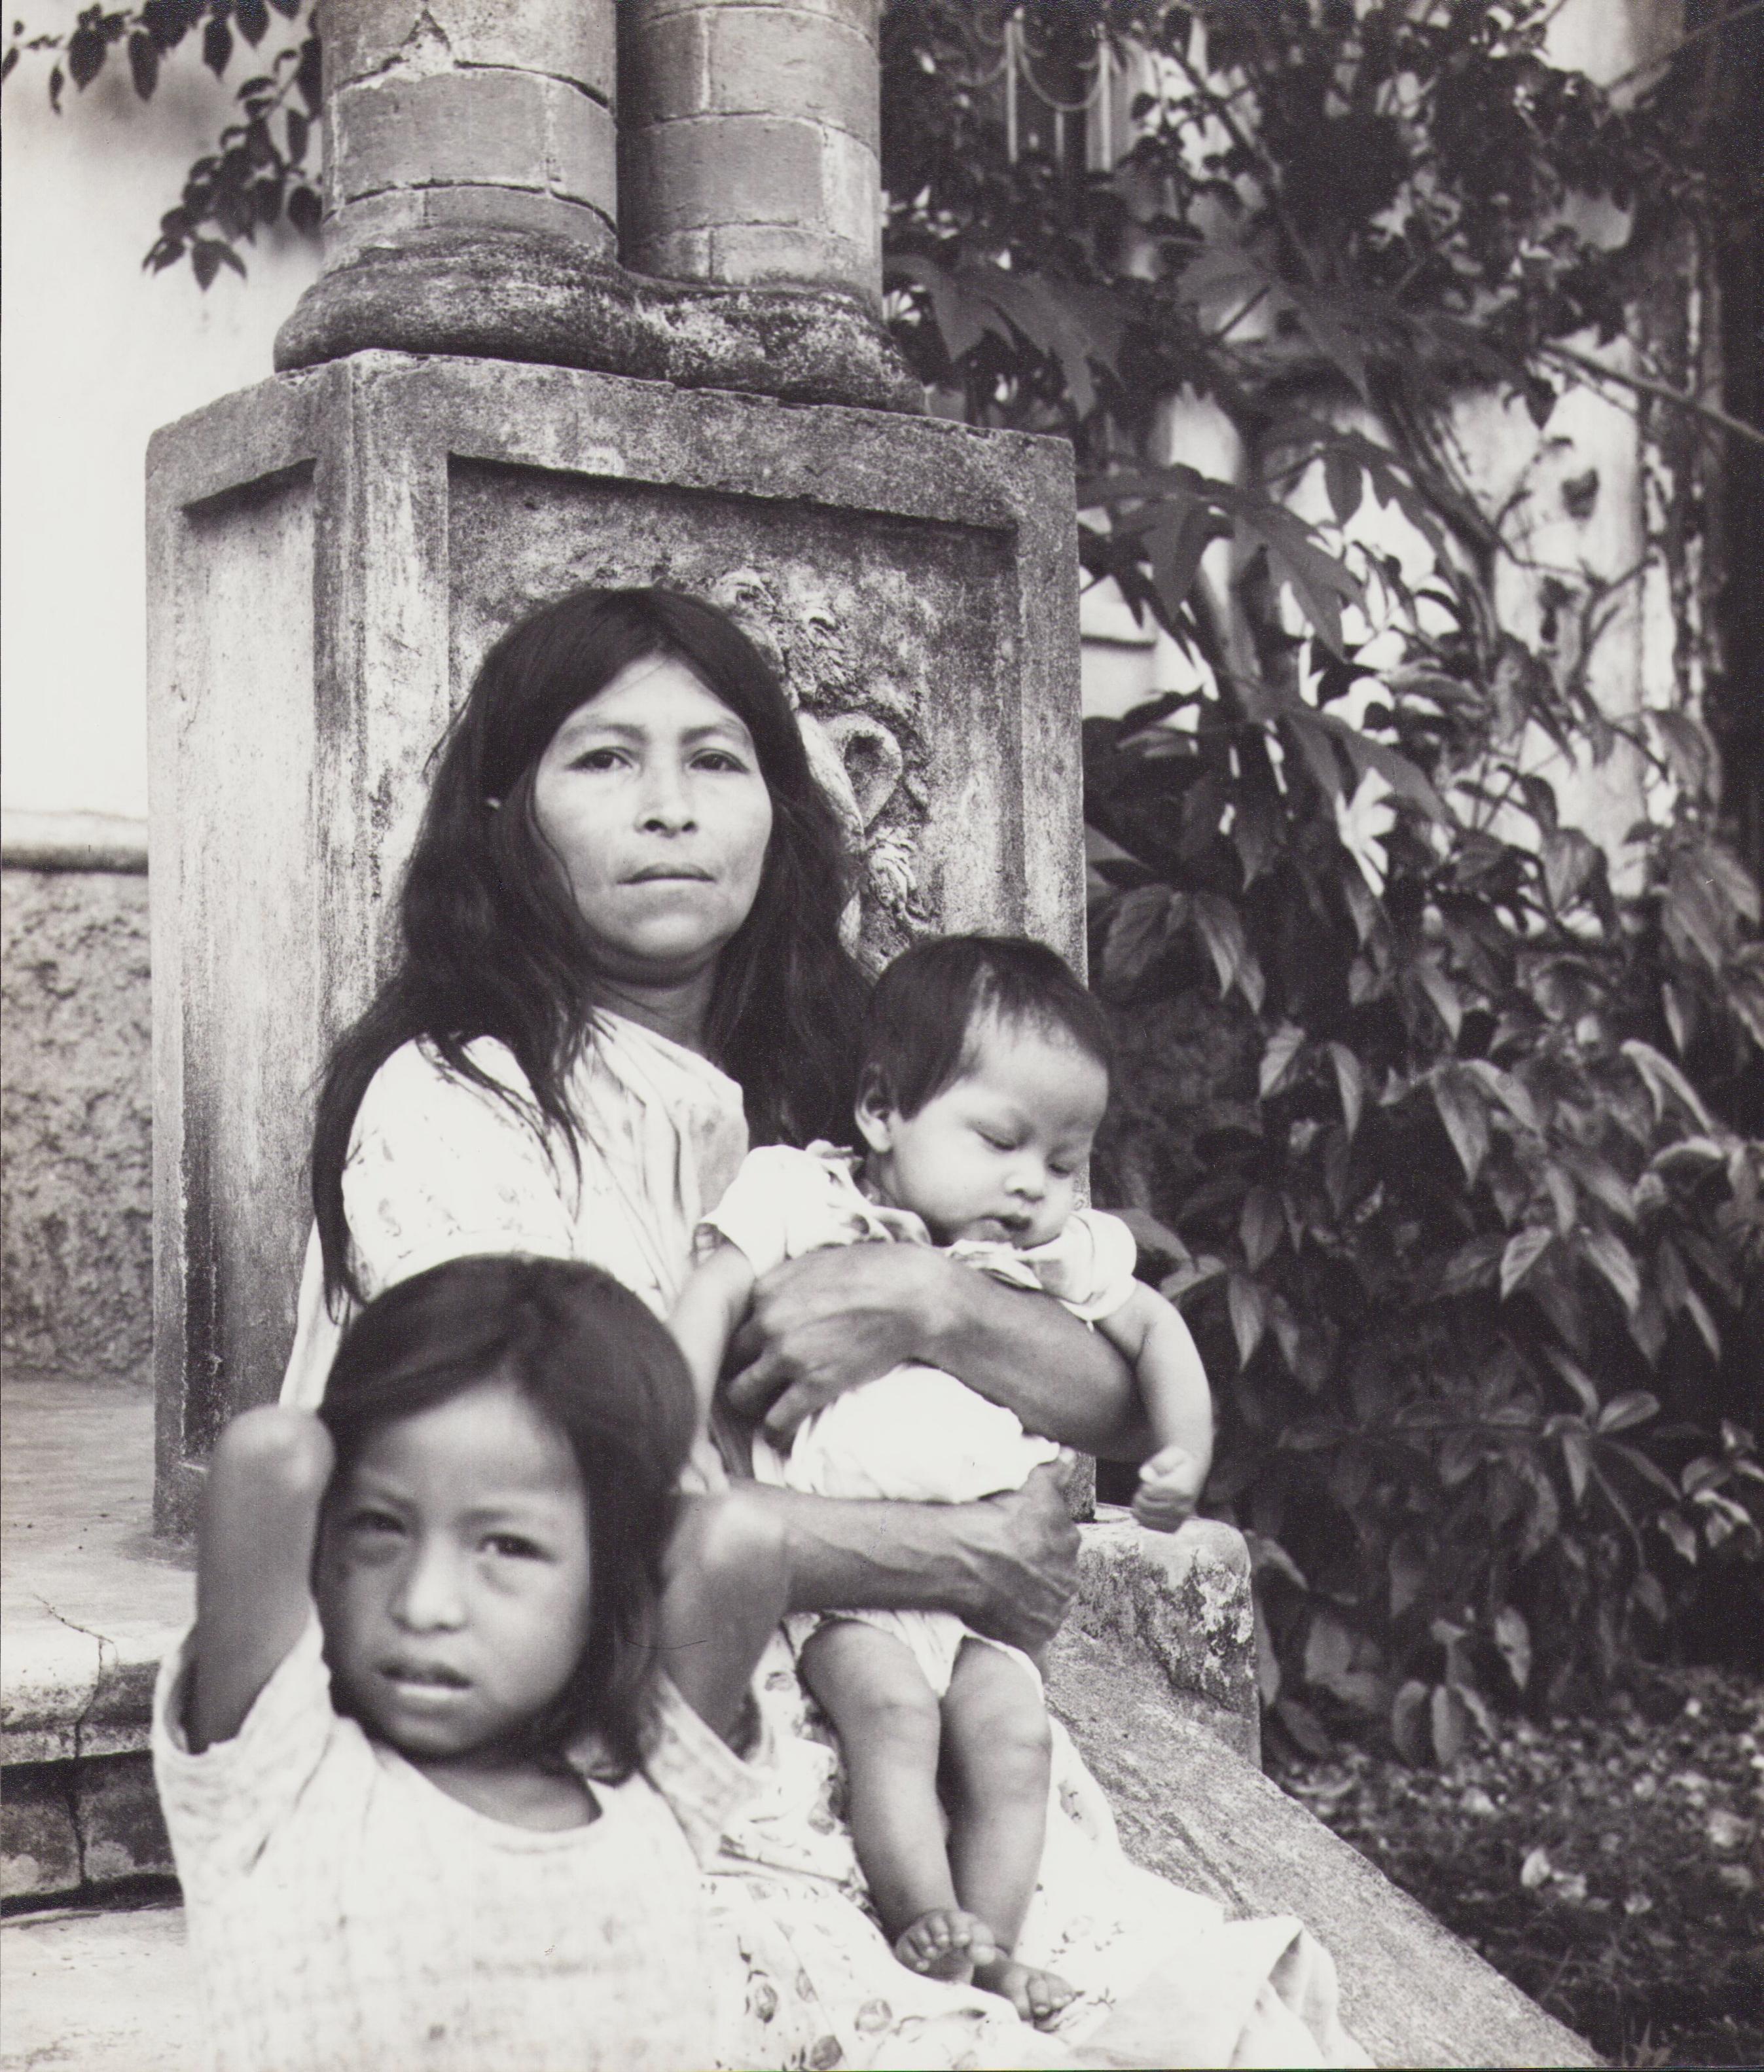 Hanna Seidel Portrait Photograph - Ecuador, Mother, Black and White Photography, 1960s, 26, 3 x 22, 7 cm